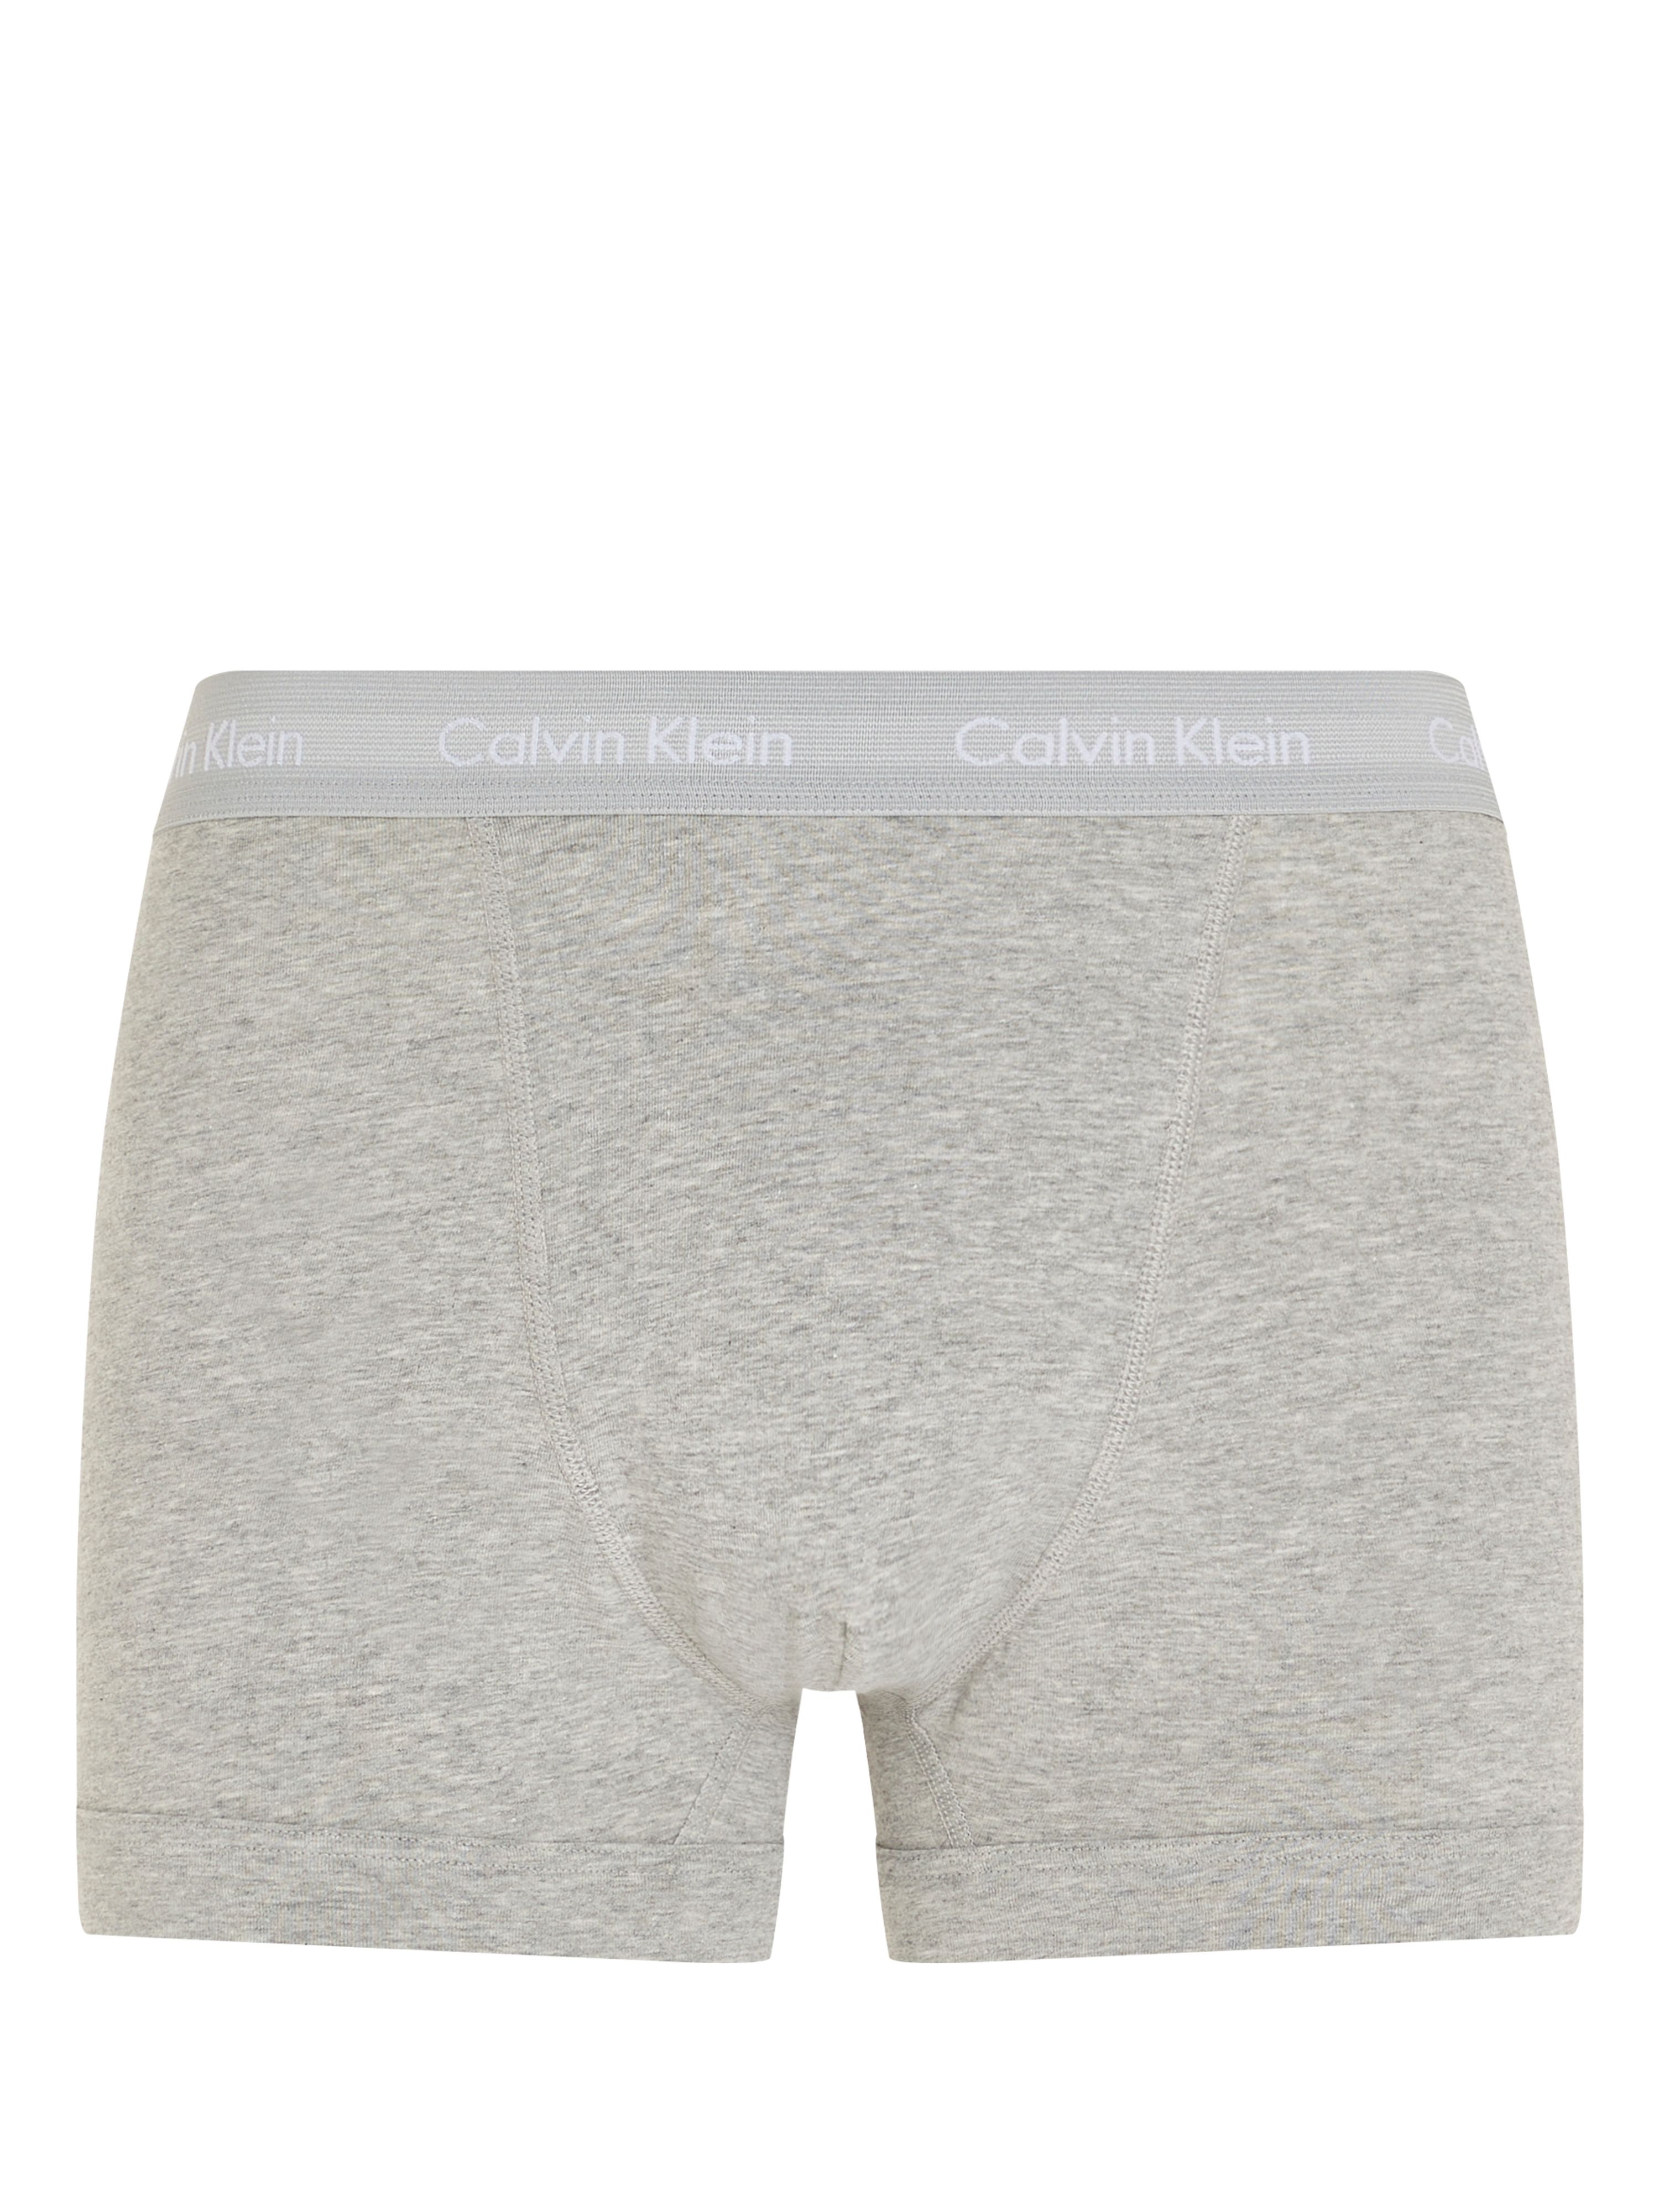 Calvin Klein Menswear Boxershort 3-pack Grijs 092209-001-L